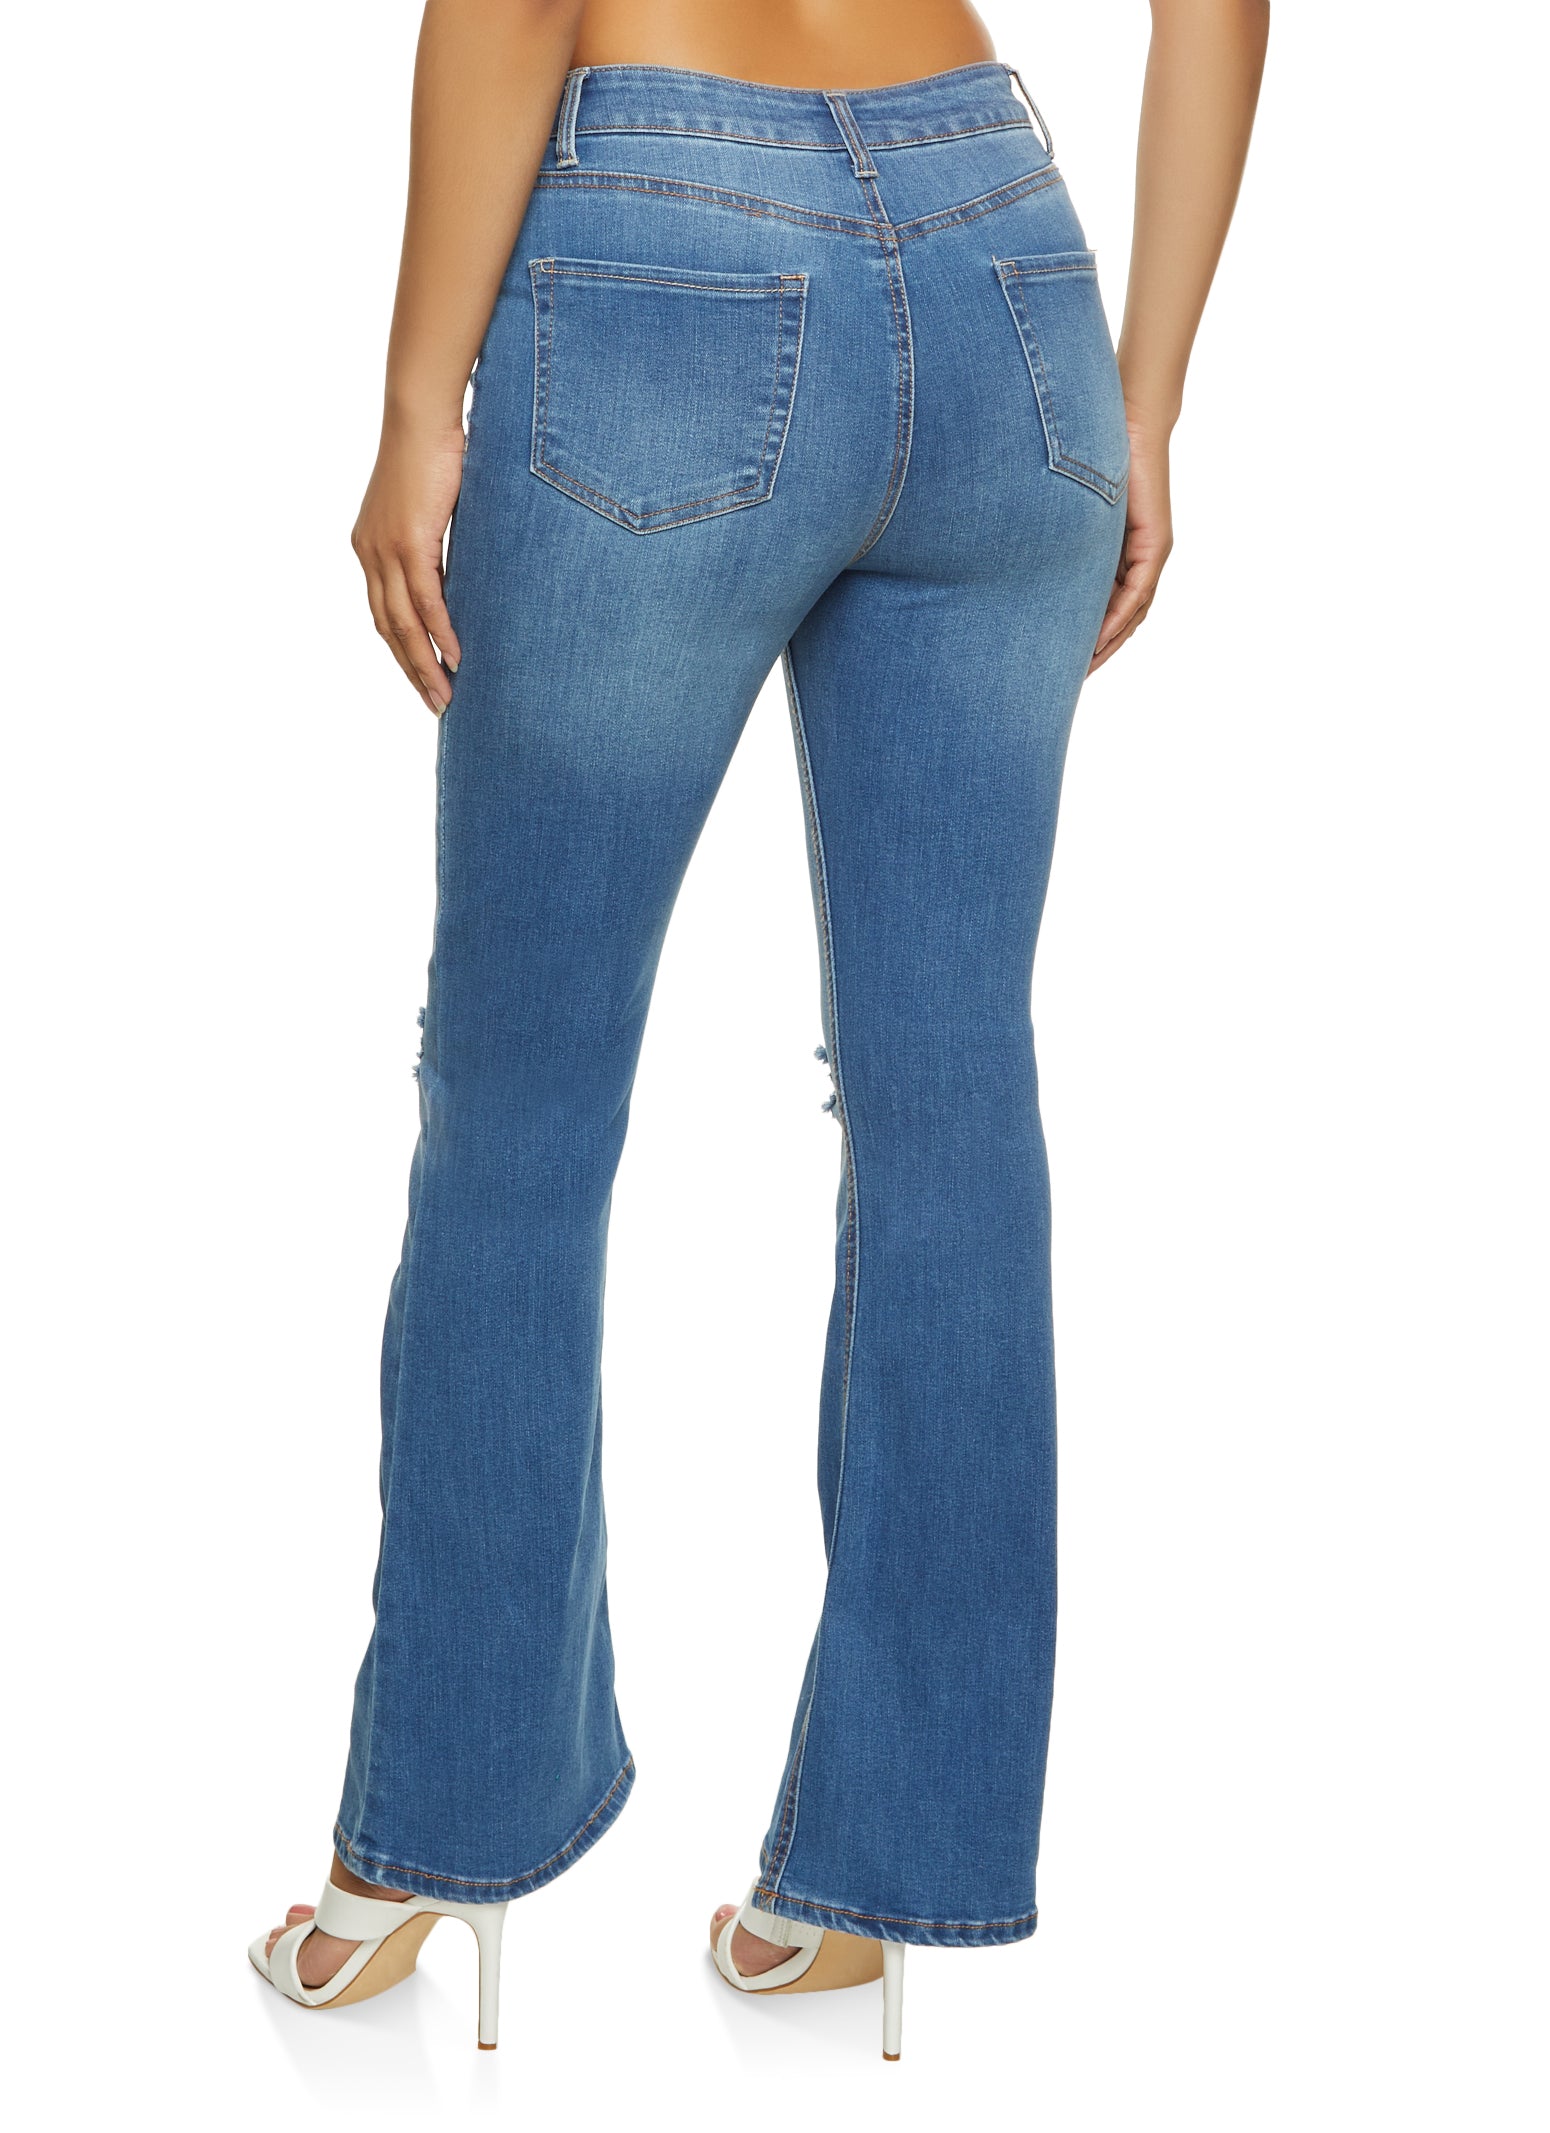 WAX Distressed Flared Jeans